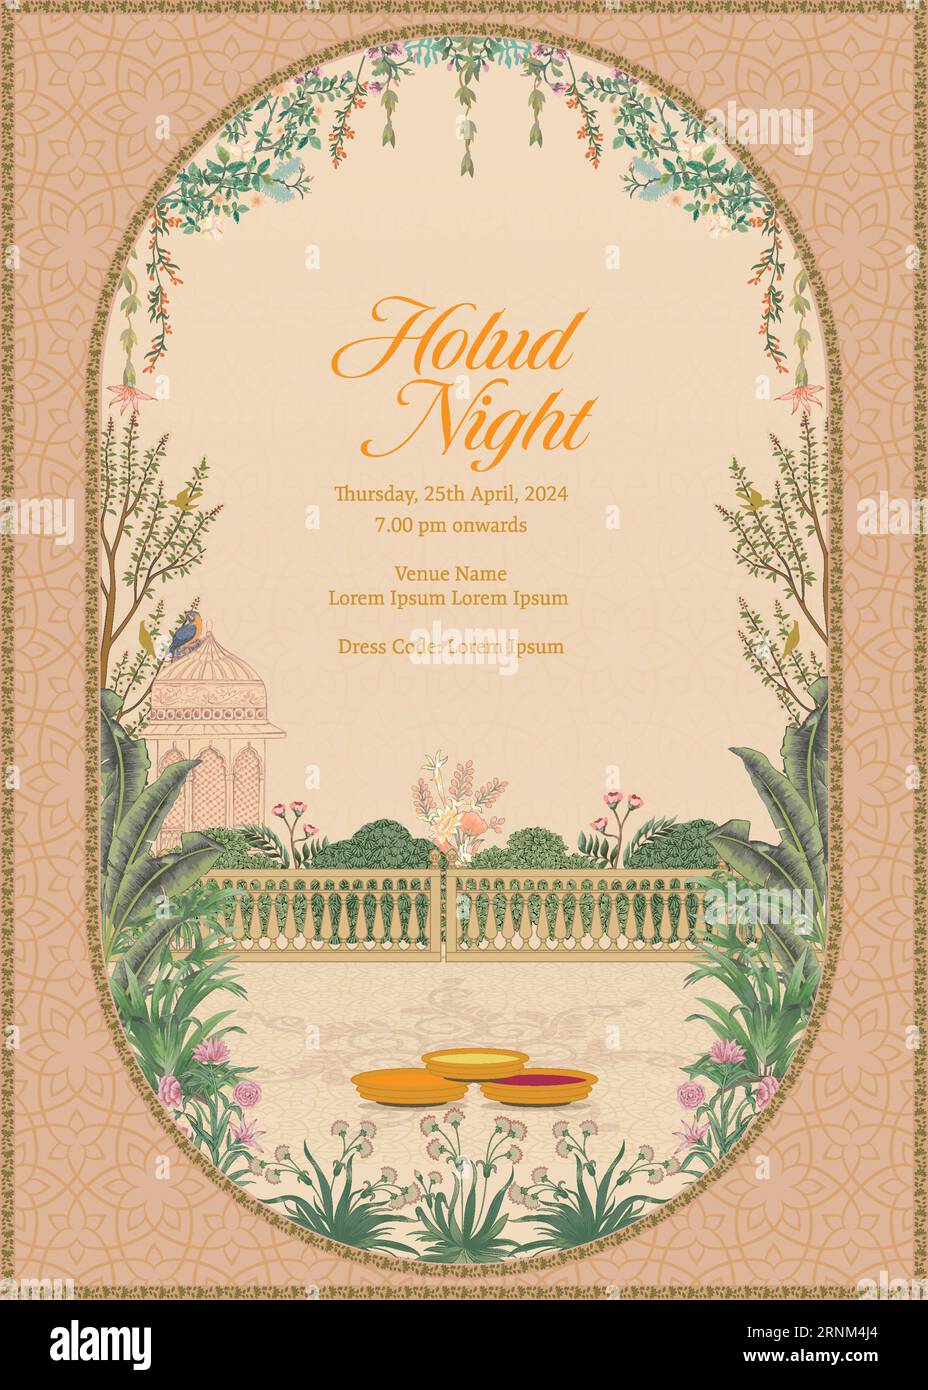 Mariage moghol indien traditionnel Holud Night invitation Card Design Illustration vectorielle. Illustration de Vecteur